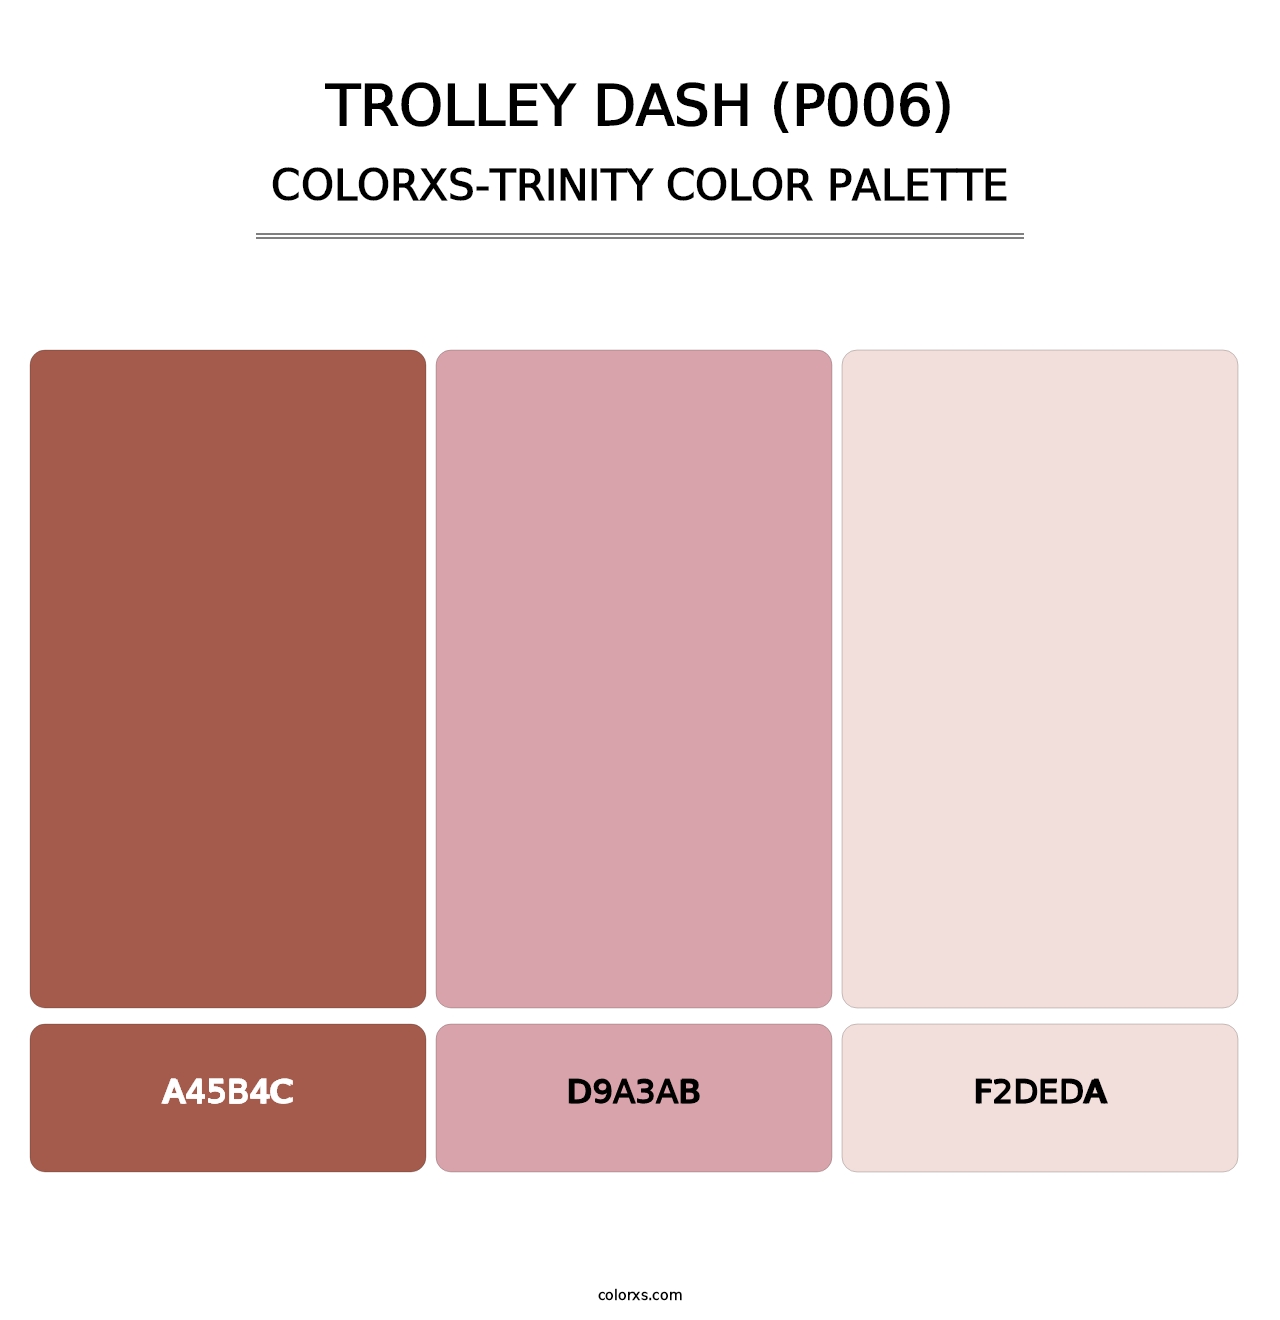 Trolley Dash (P006) - Colorxs Trinity Palette